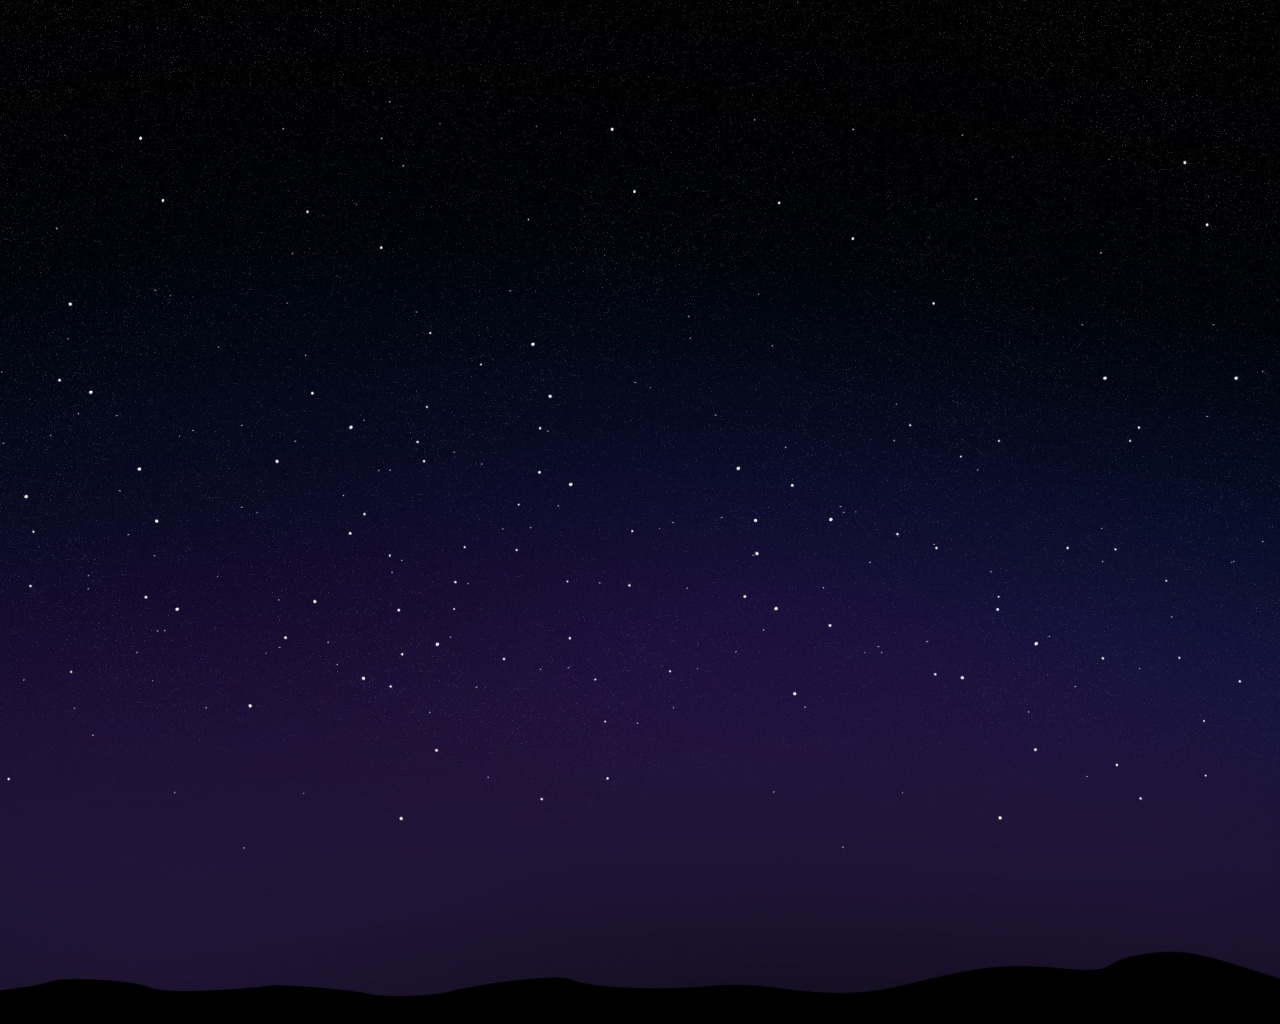 Starry Night Sky Desktop Pc And Mac Wallpaper